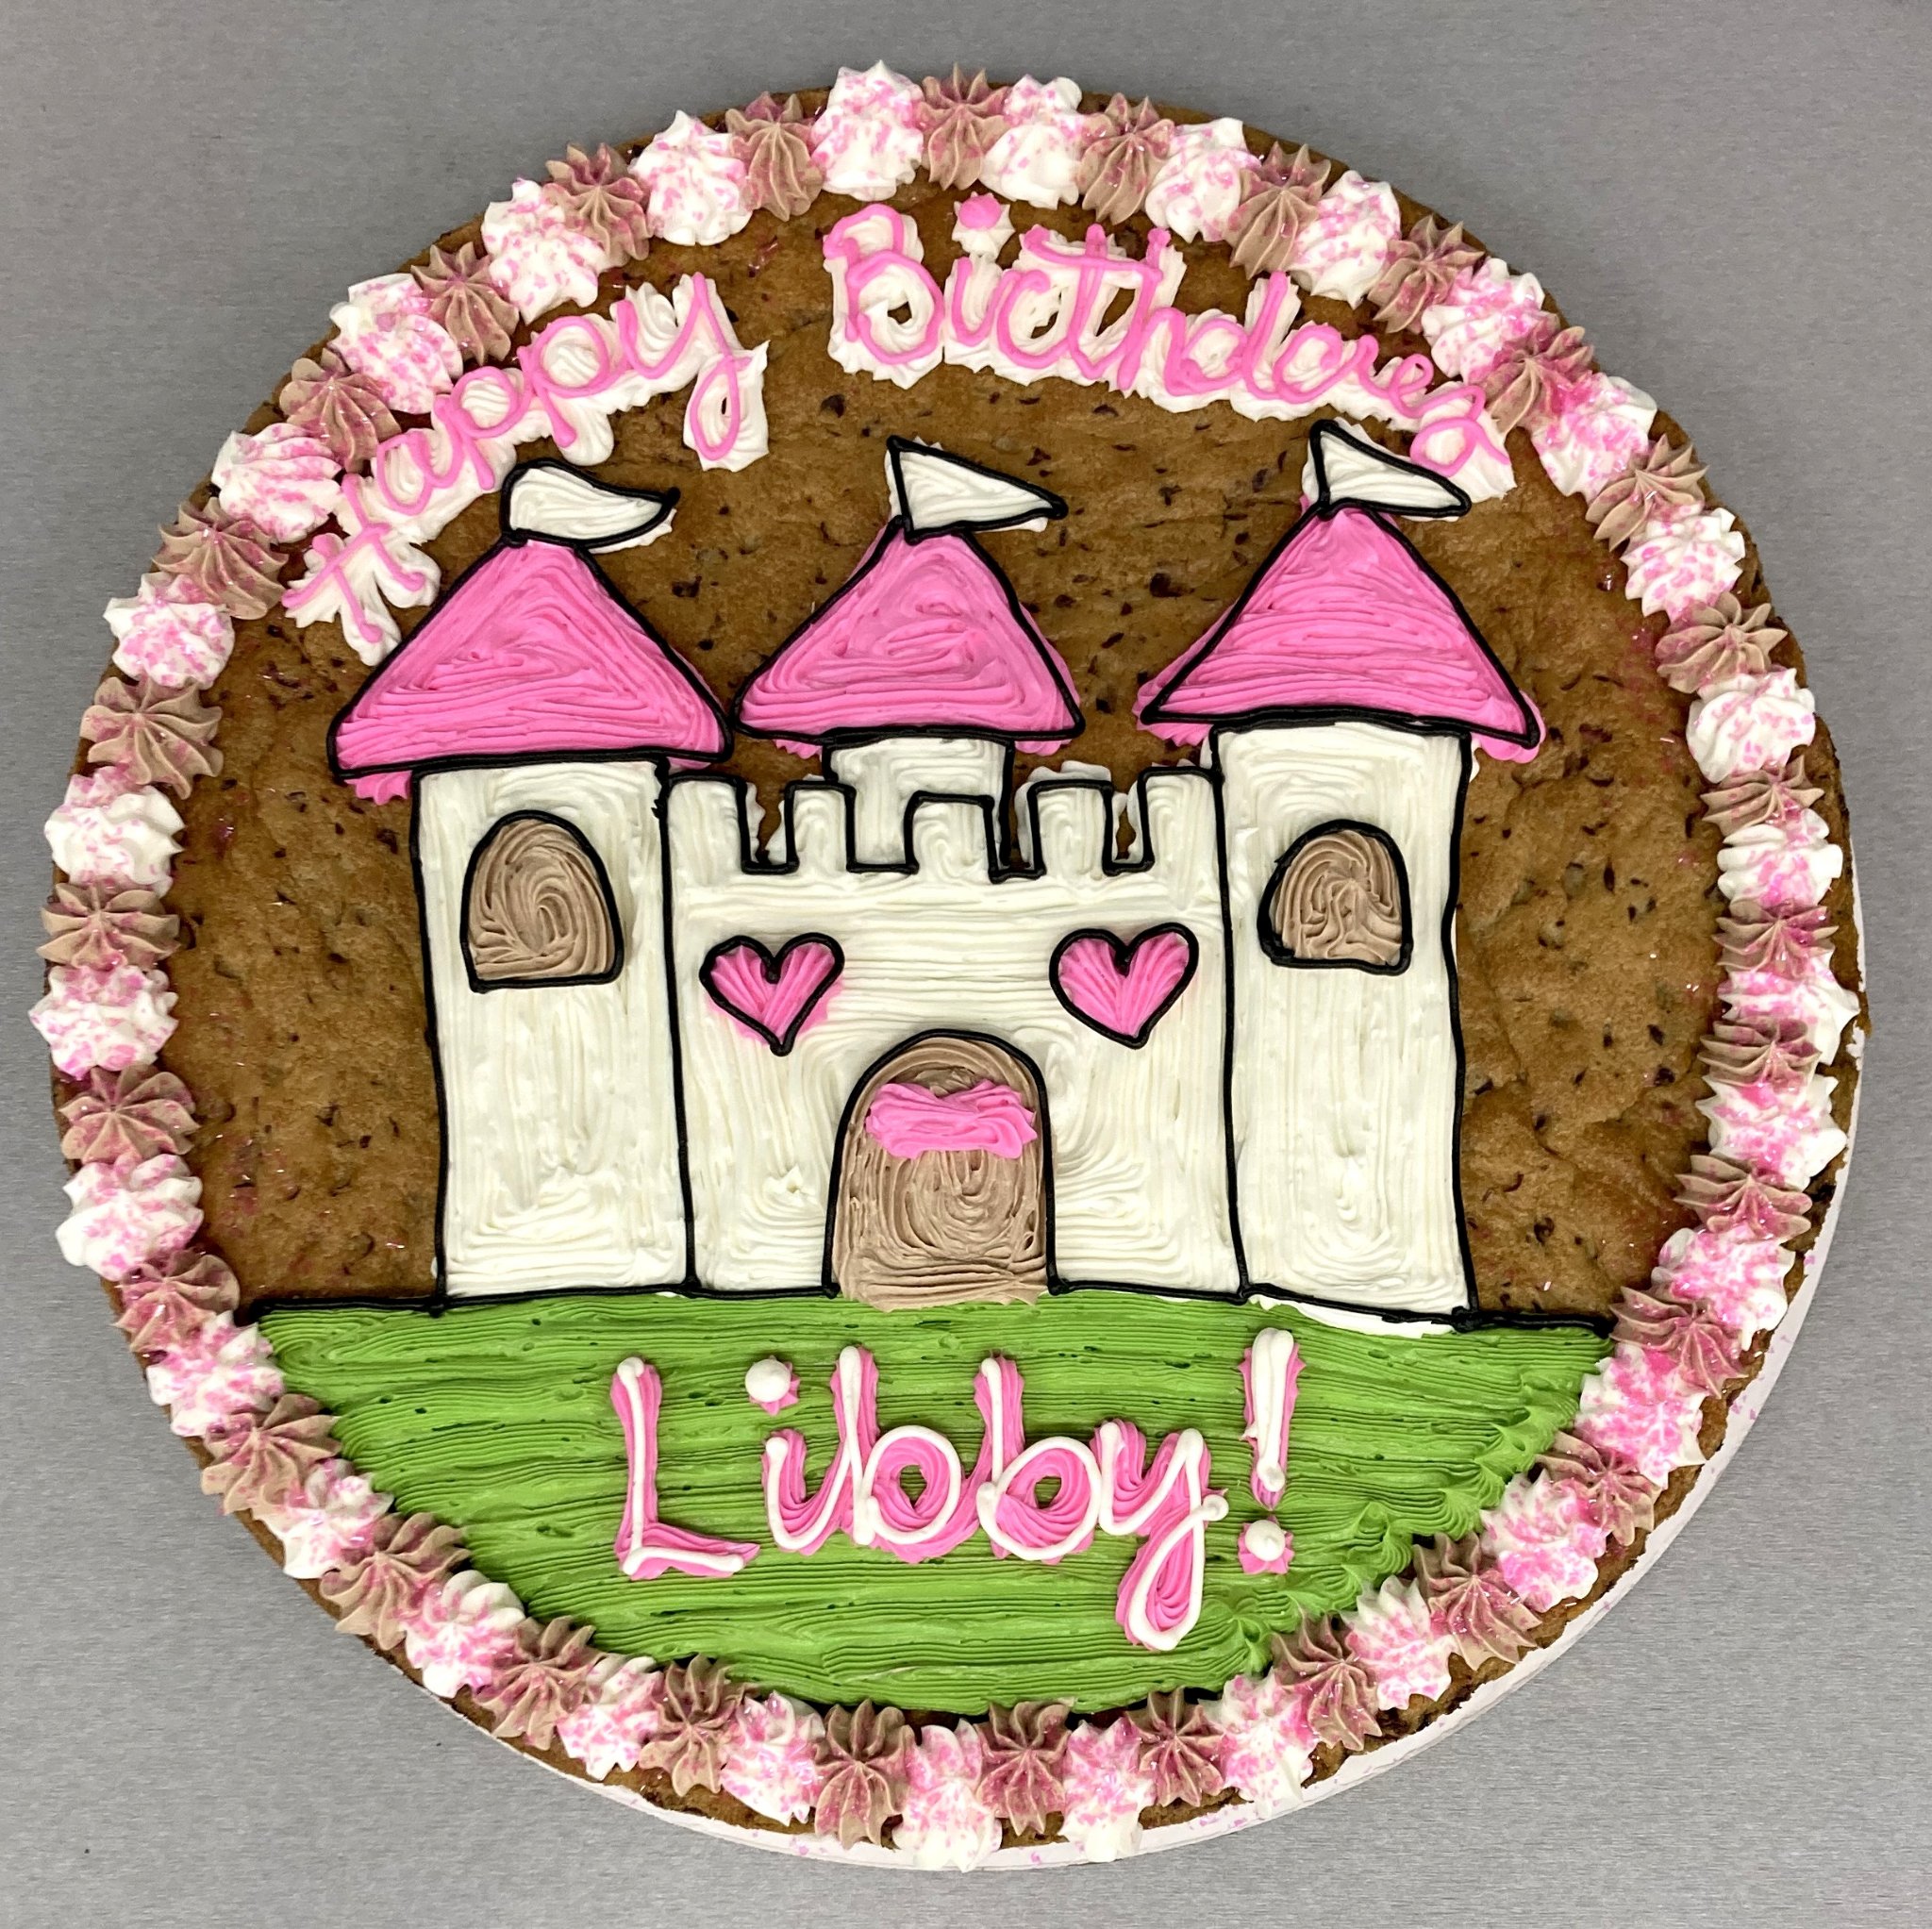 Princess Theme Cake. Castle Theme by Creme Castle